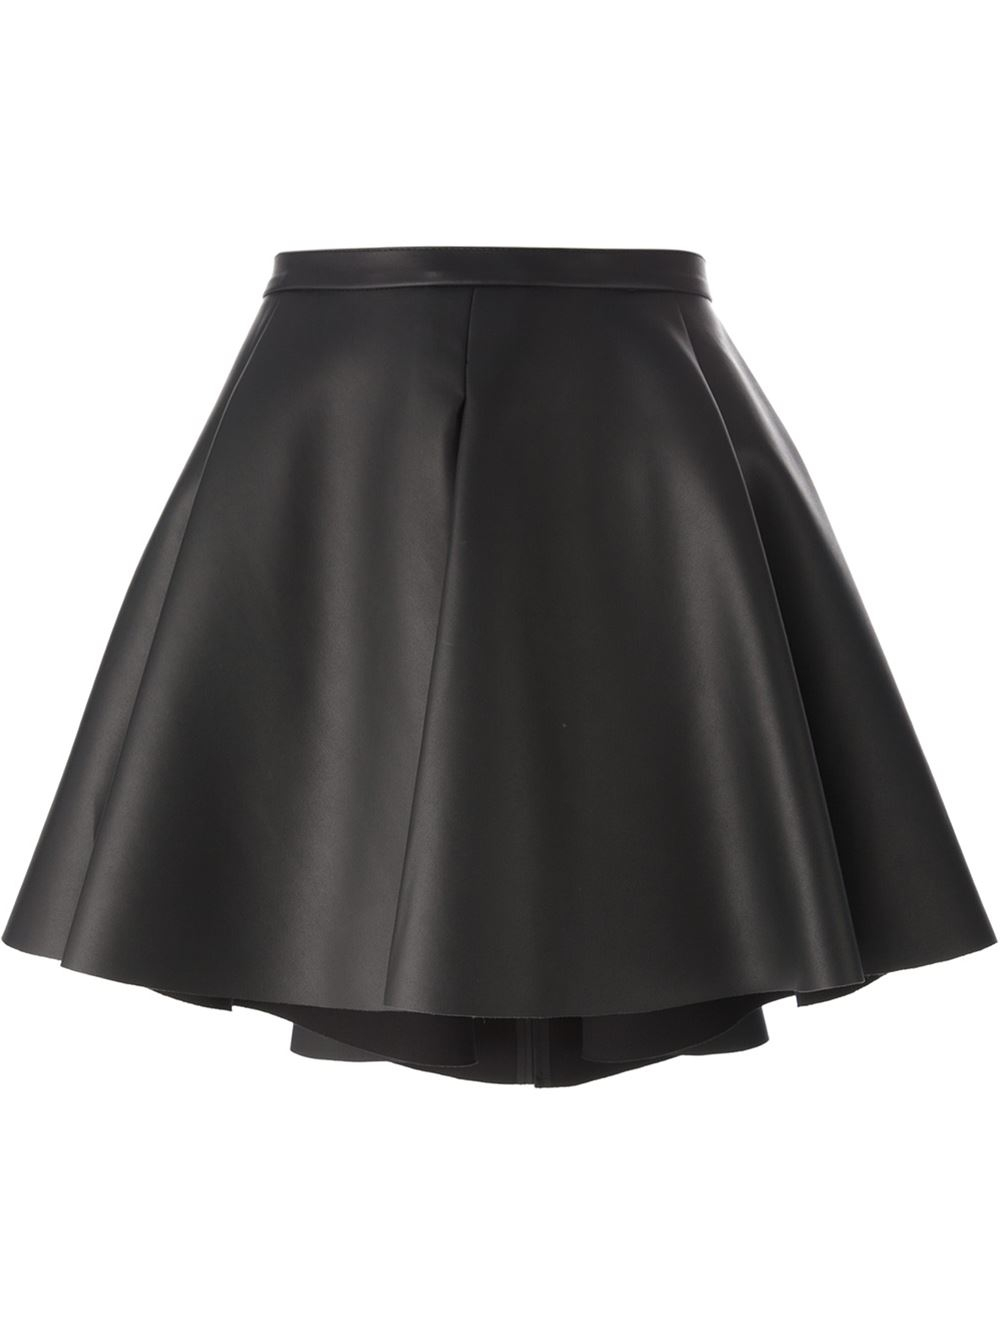 Amen Faux Leather A-Line Skirt in Black | Lyst